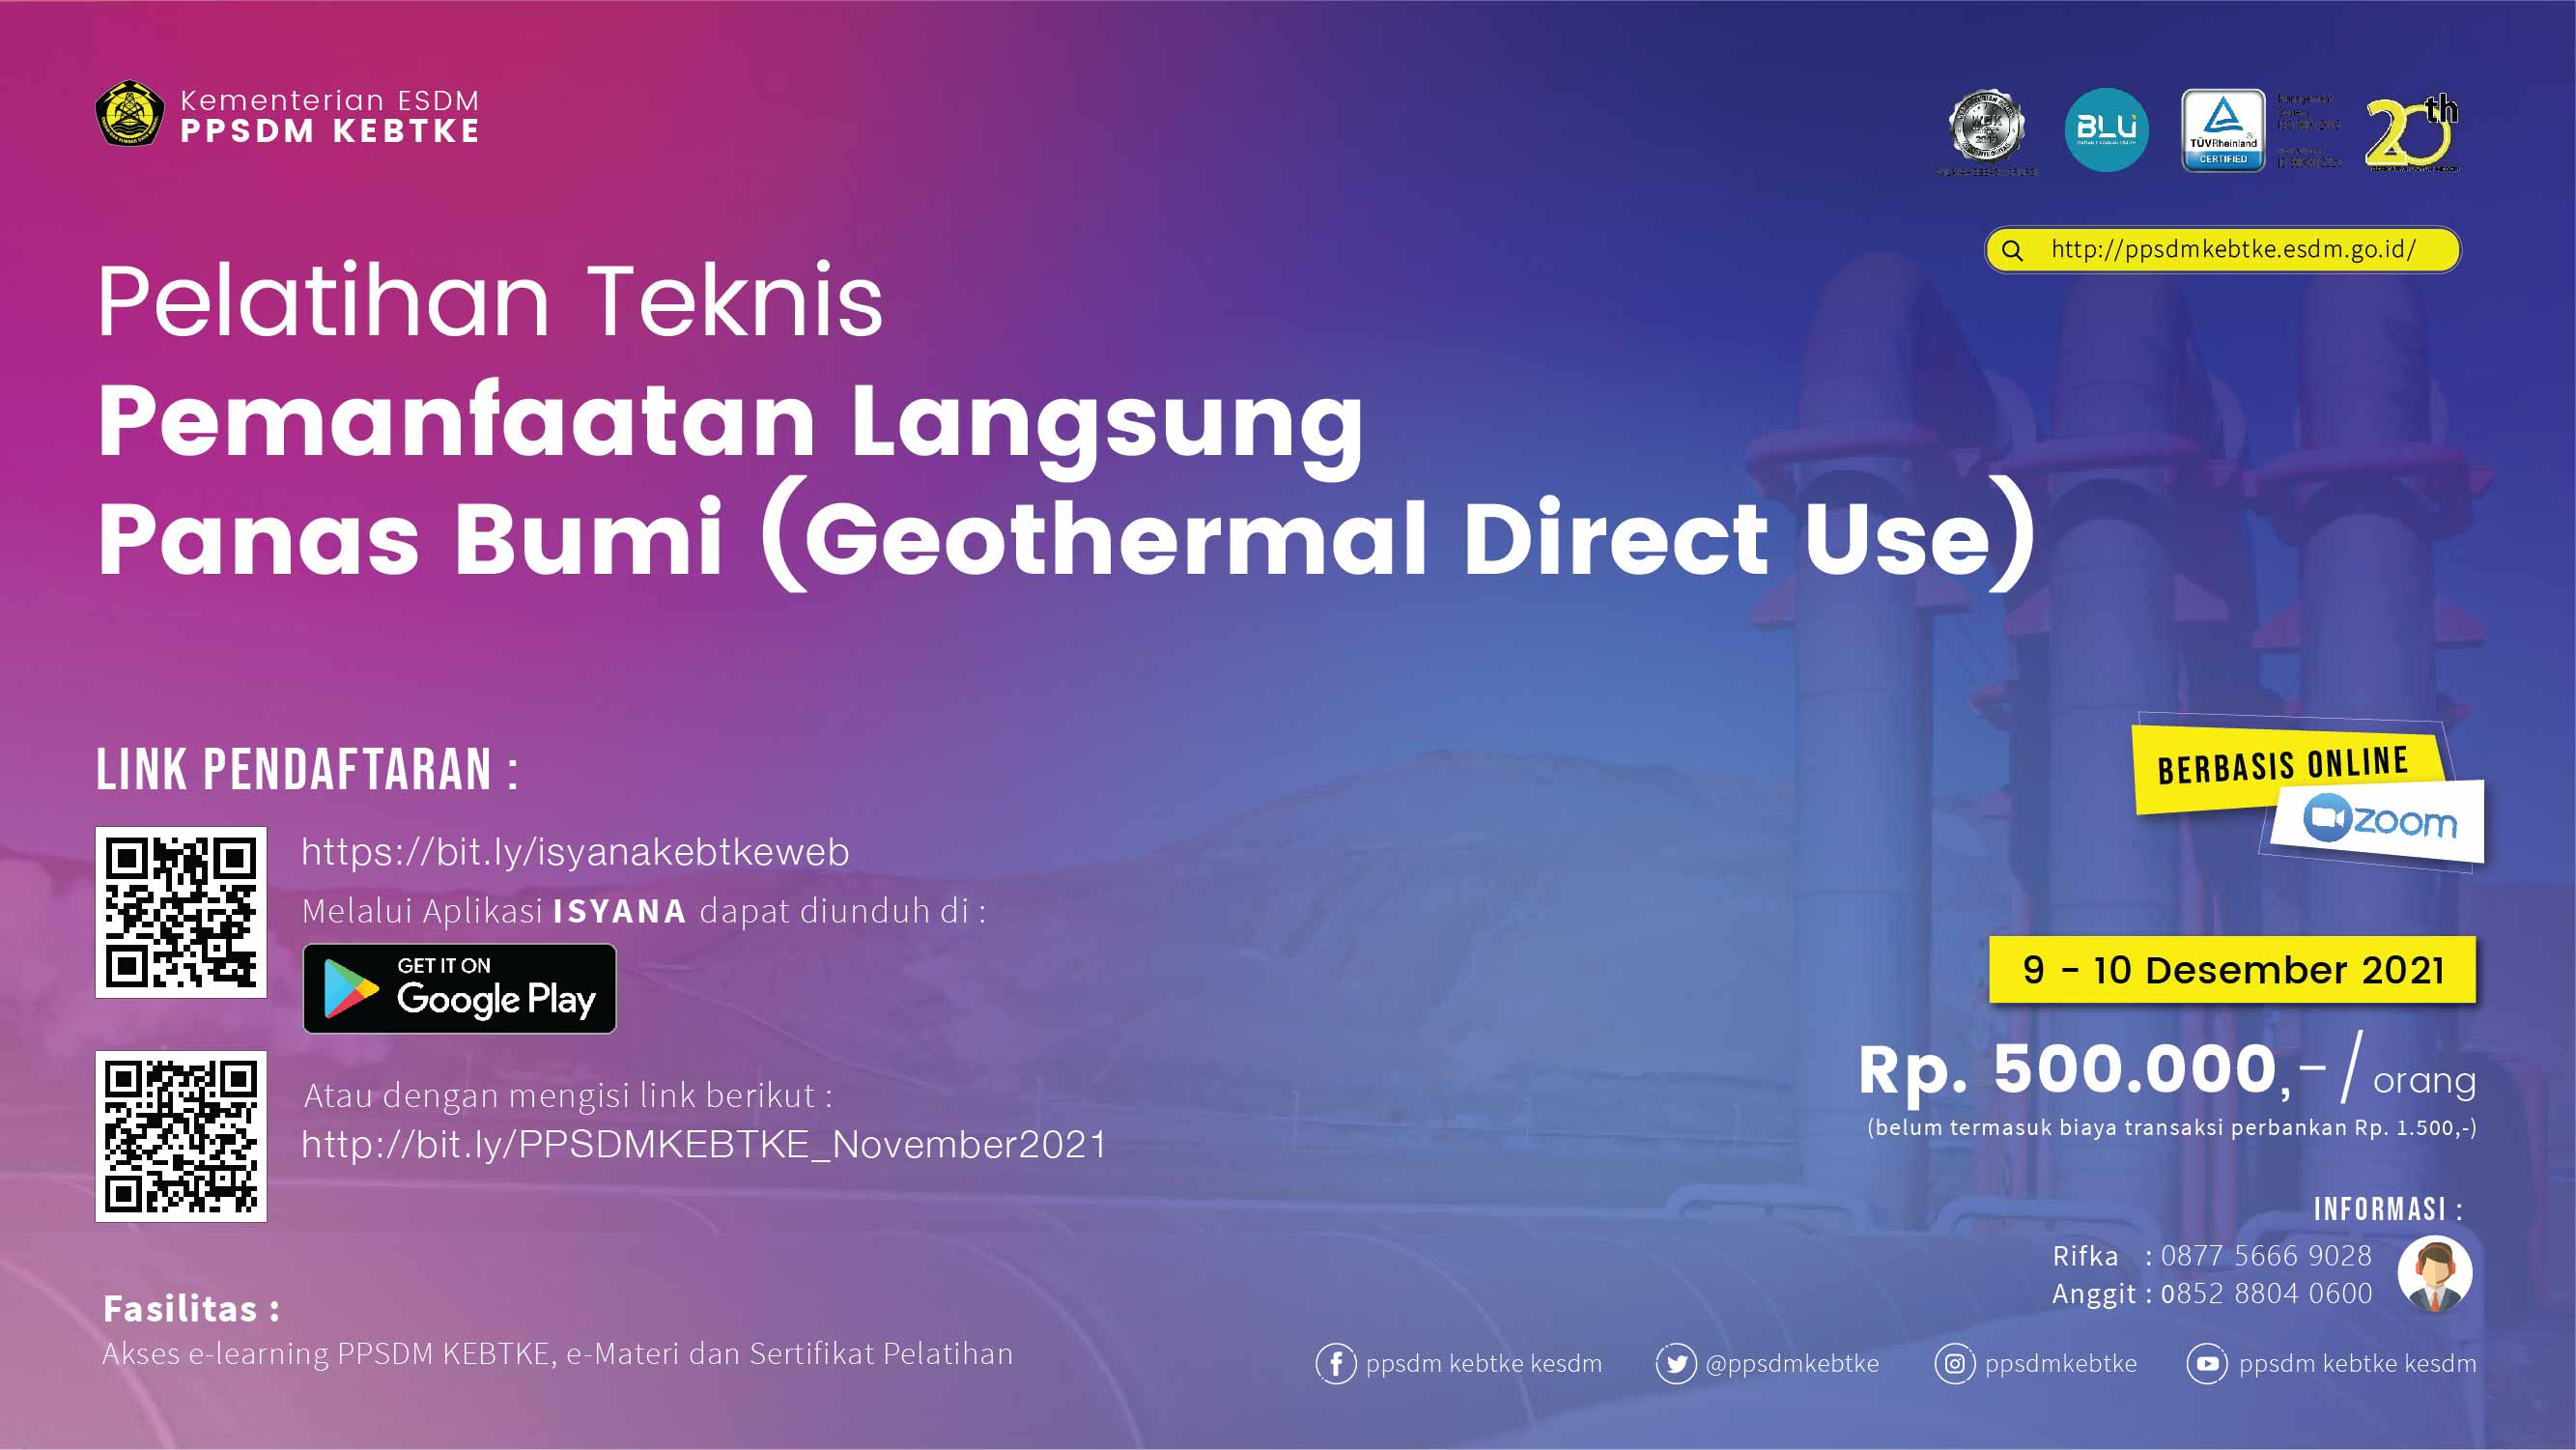 Pelatihan Teknis Pemanfaatan Langsung Panas Bumi (Geothermal Direct Use) (9-10 Desember 2021)